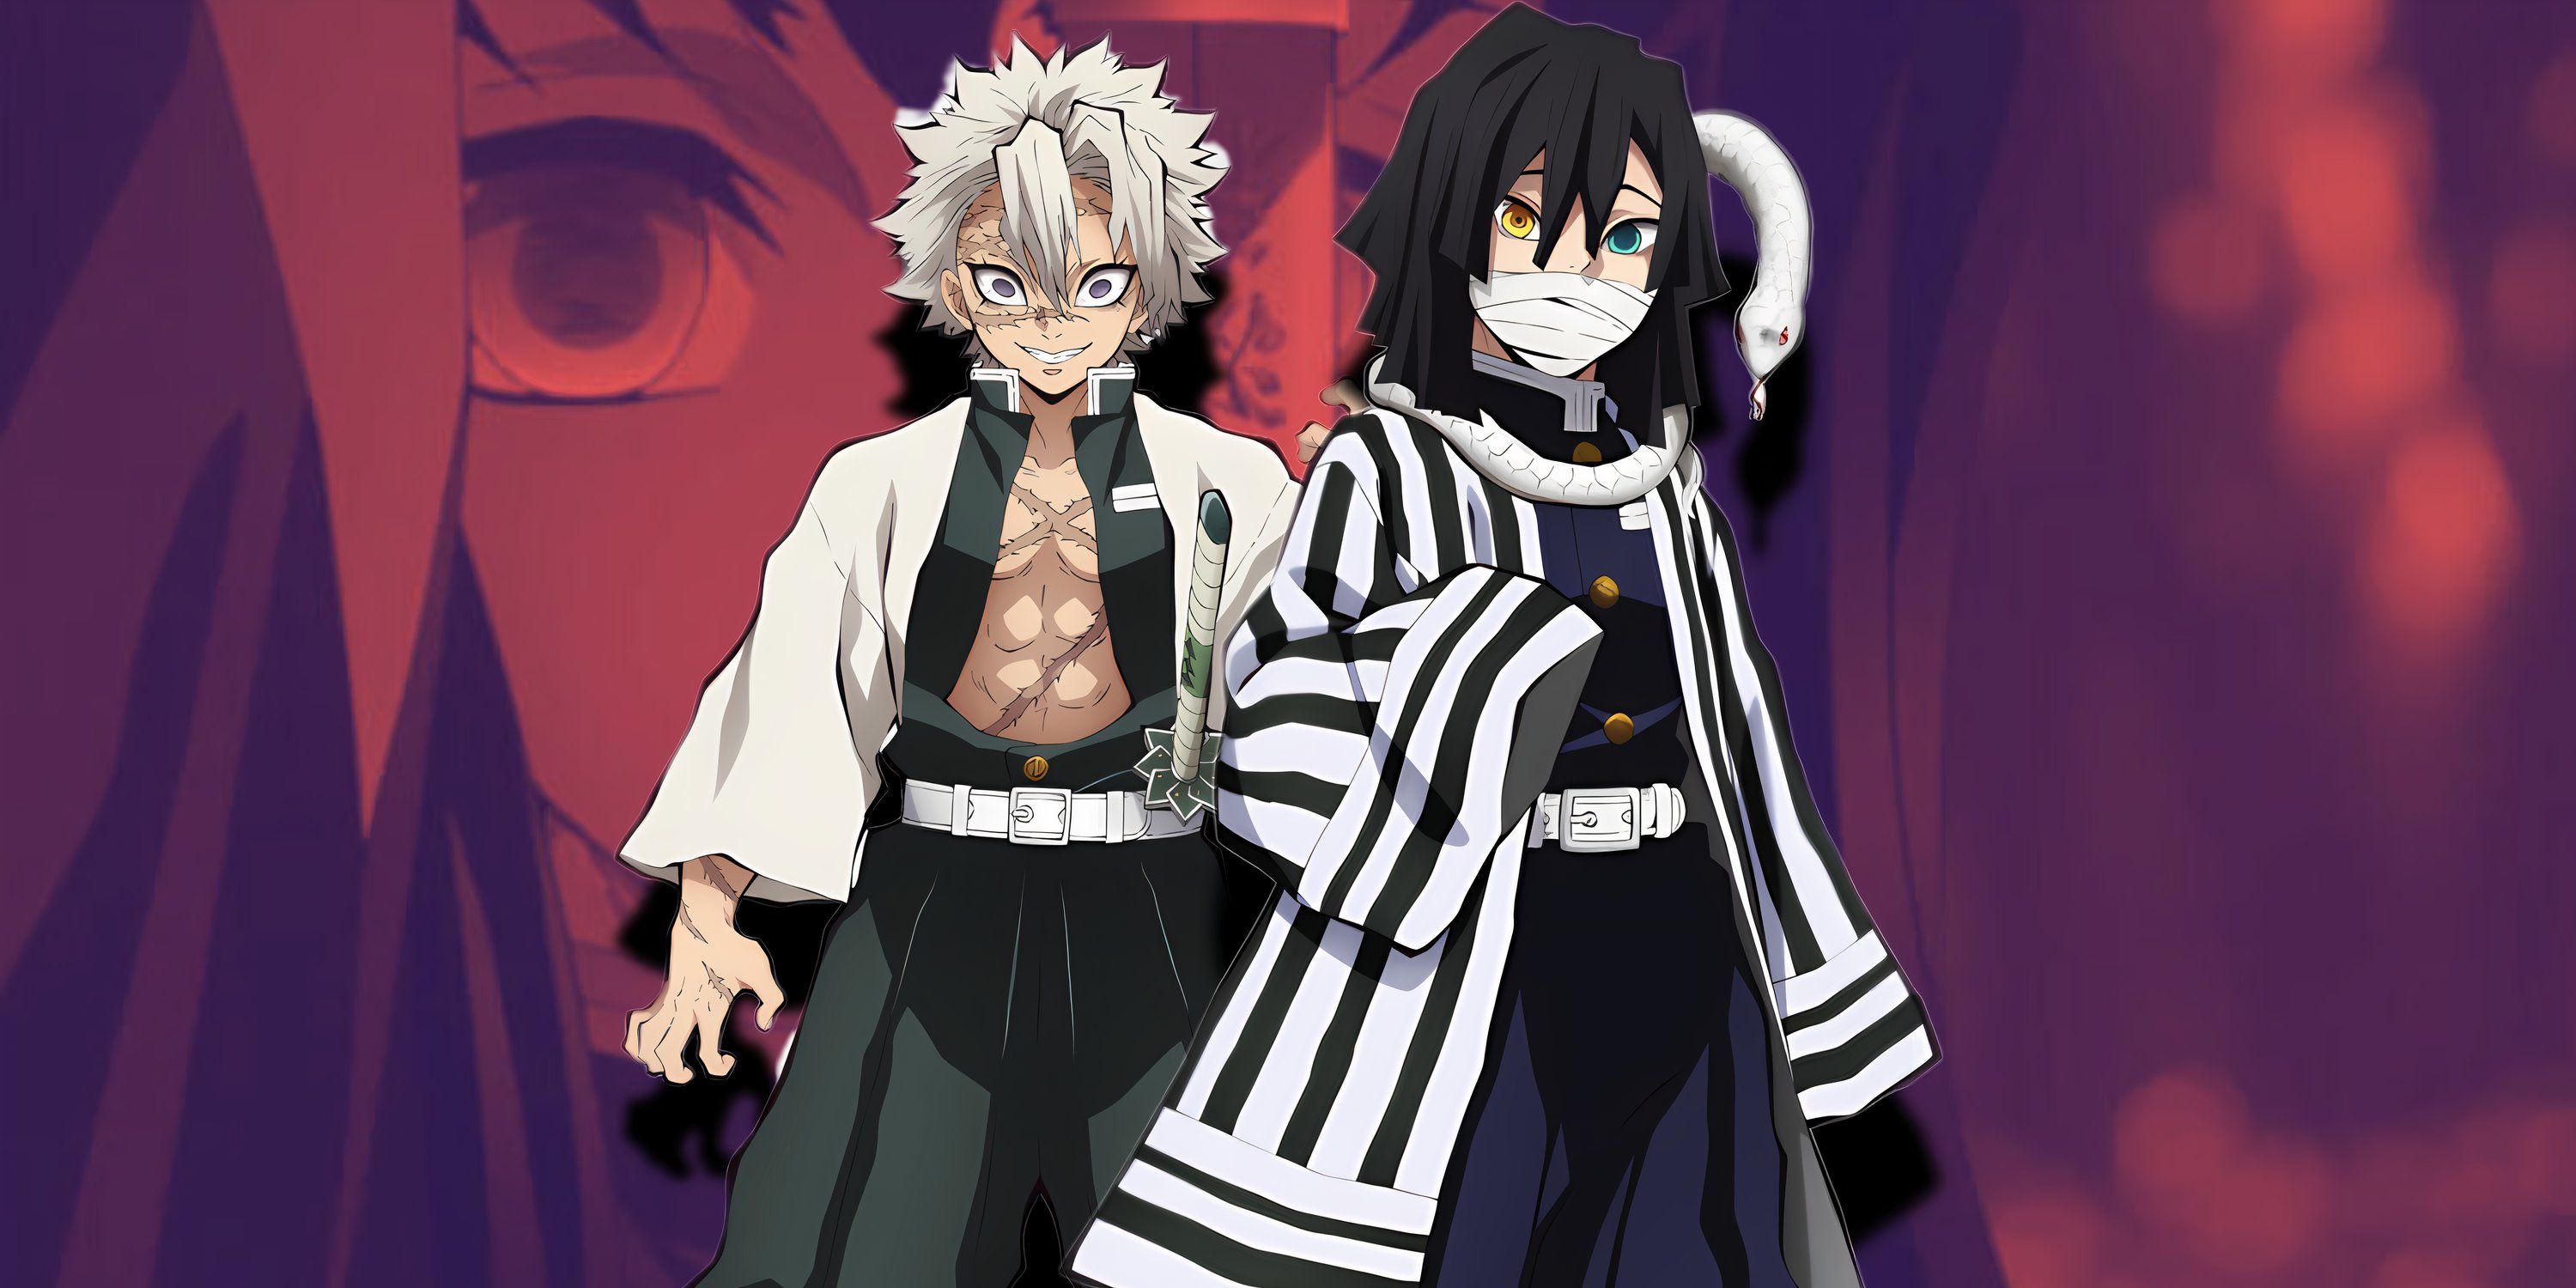 Custom Image of Shinazugawa, Iguro, and Muishio from Demon Slayer